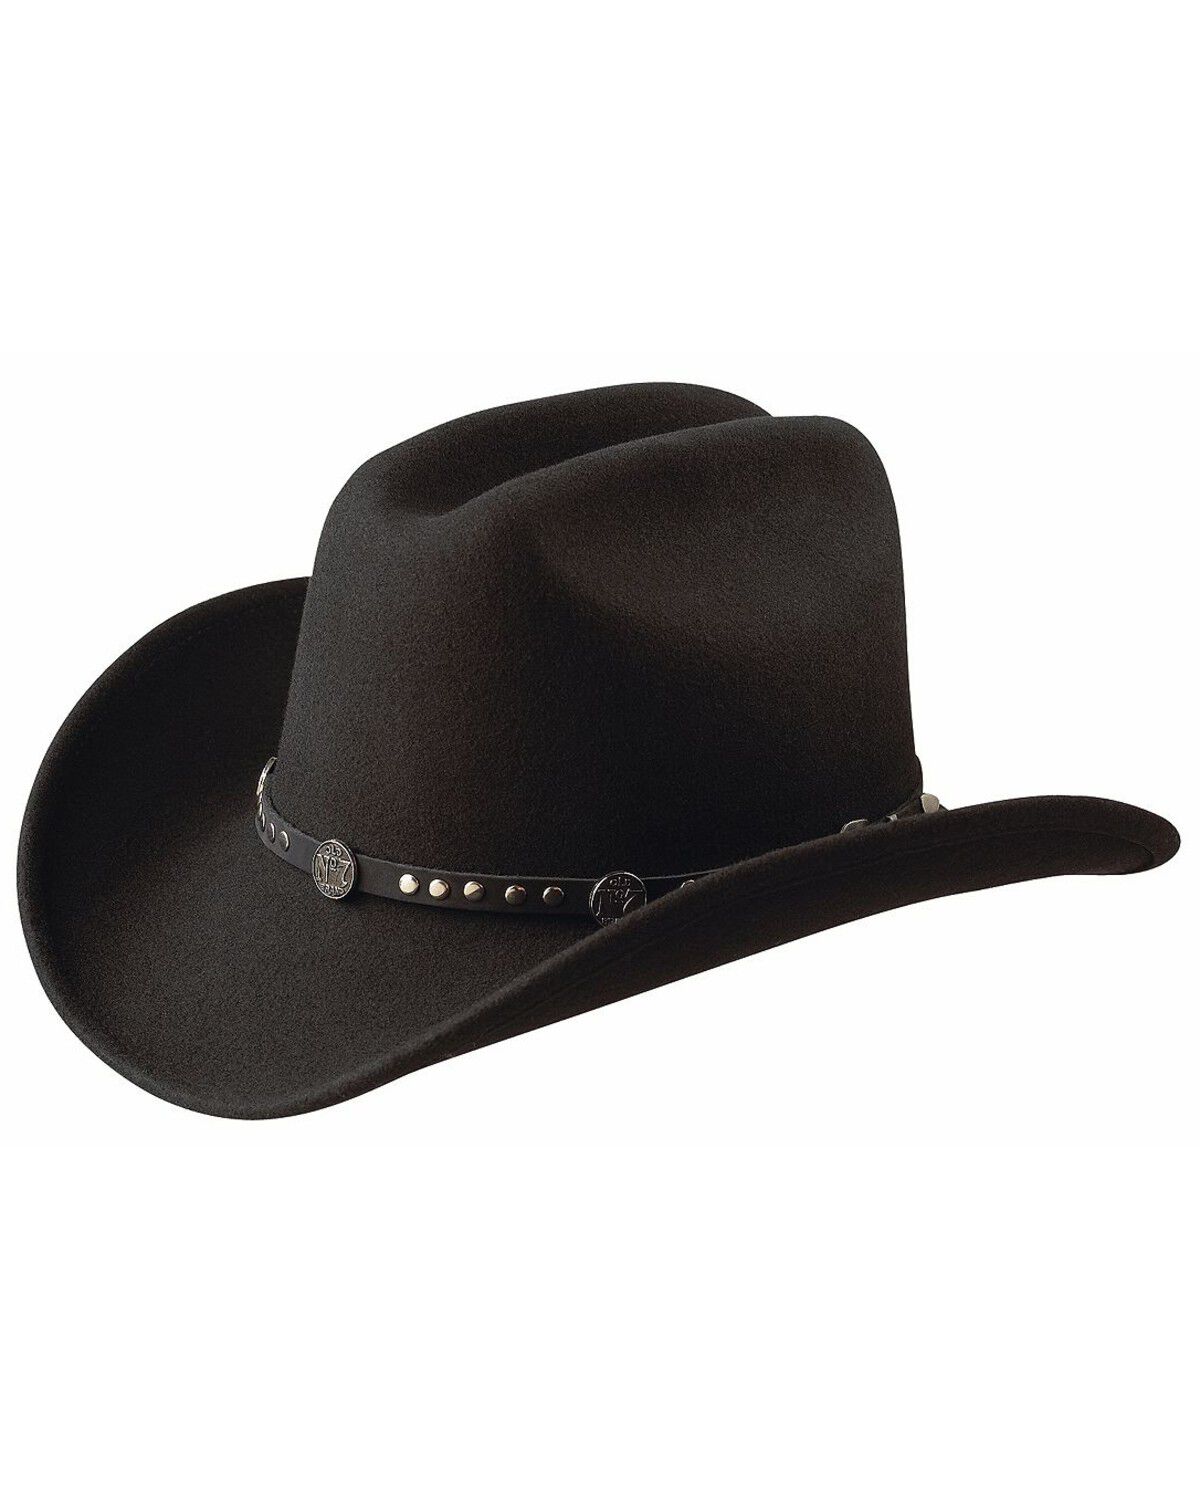 Джек шляпа. Шляпа родео. Black Jack шляпа. Stetson Crushable. Покер в ковбойских шляпах.